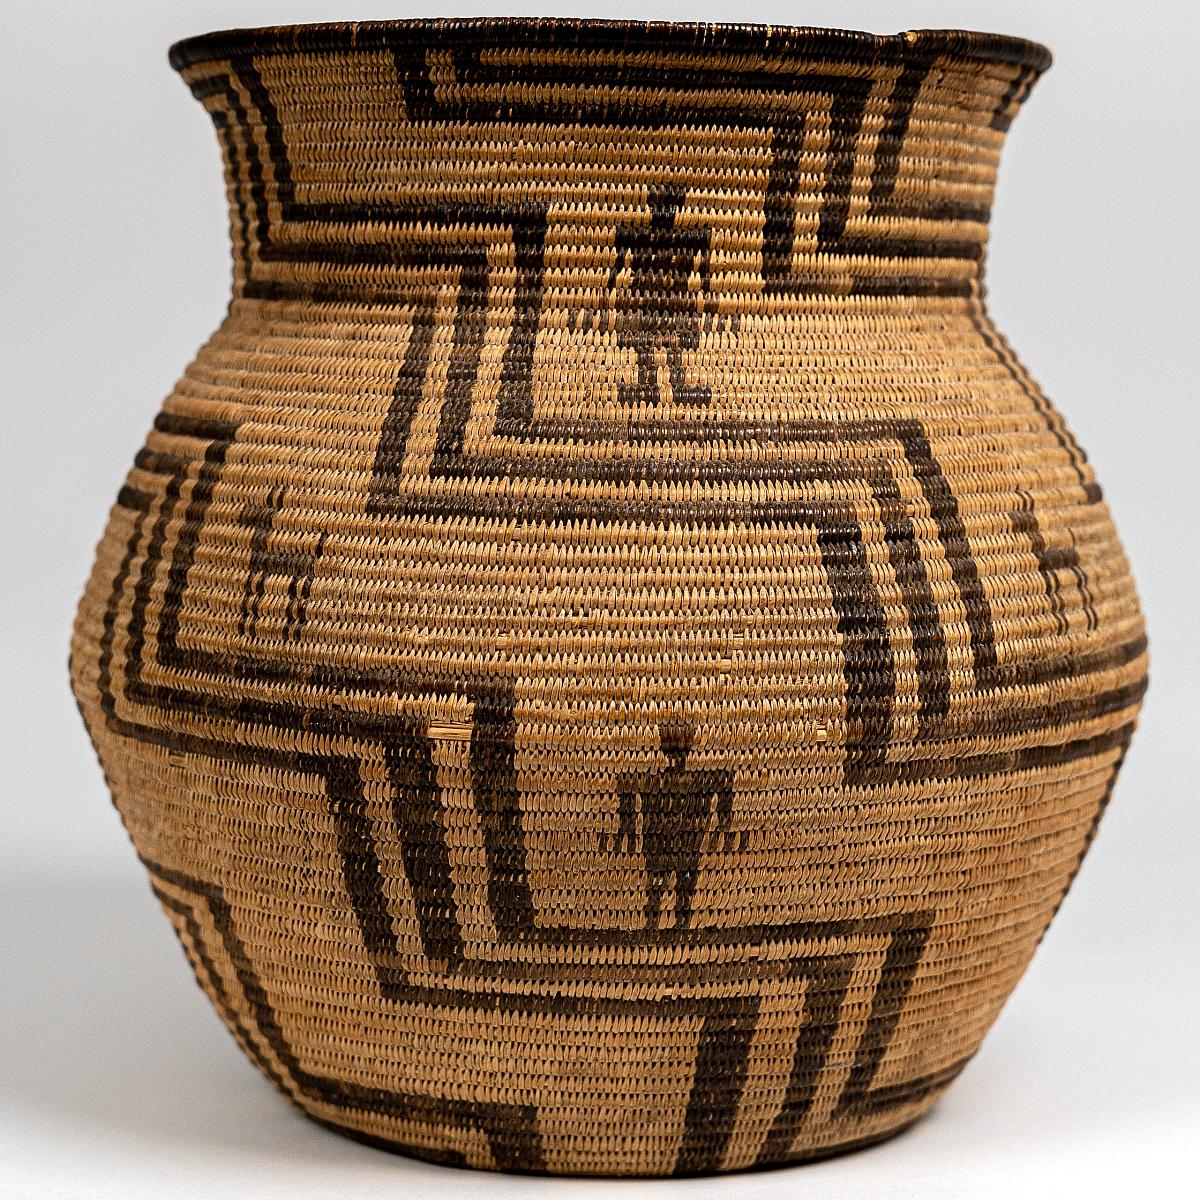 Apache Vase Basket featuring human and deer figures among a terraced diagonal motif